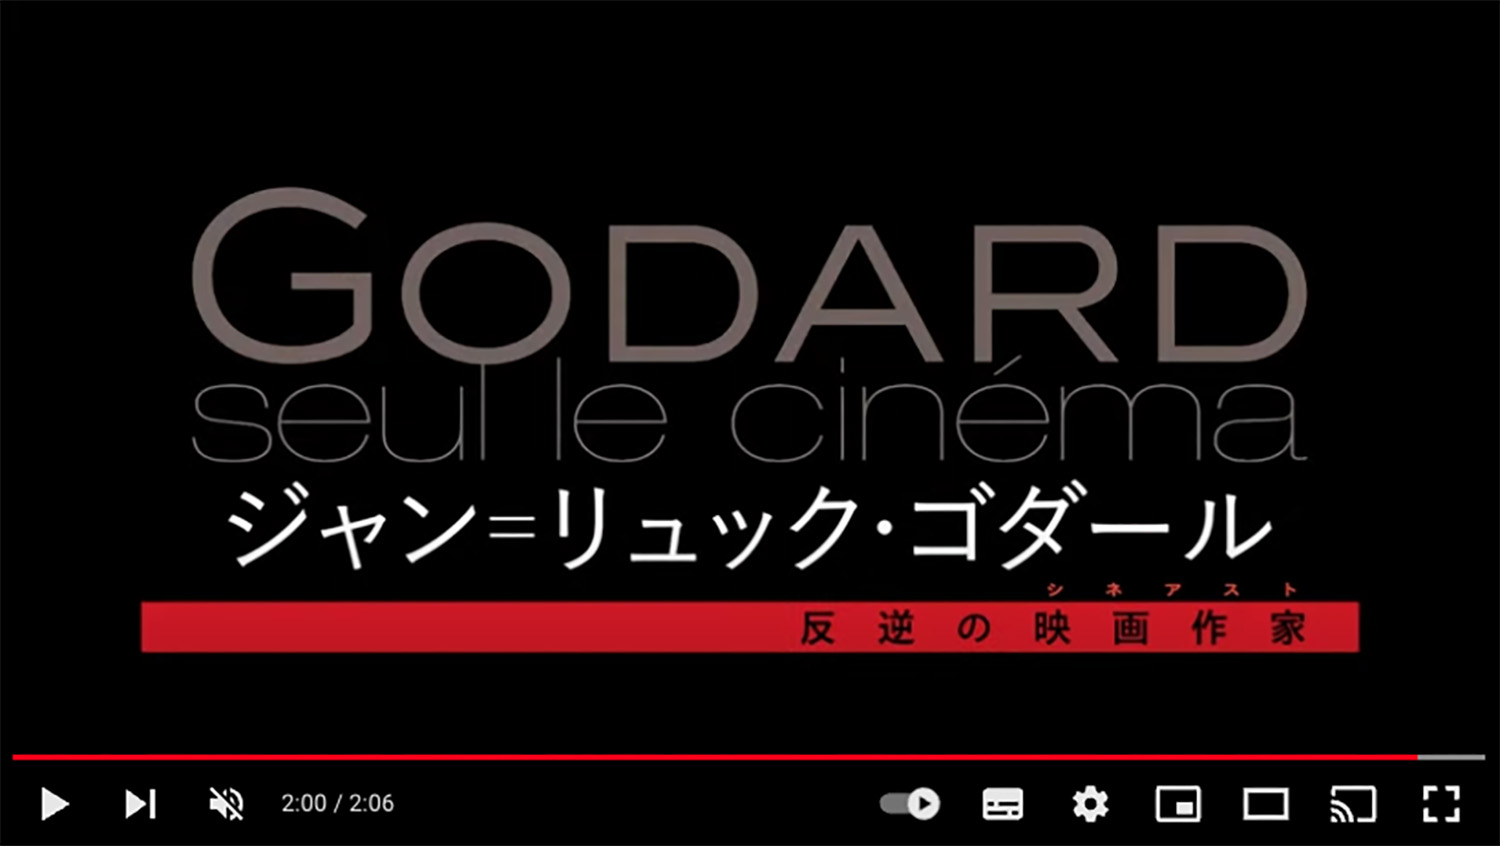 A FILM ABOUT JLG “GODARD CINEMA”